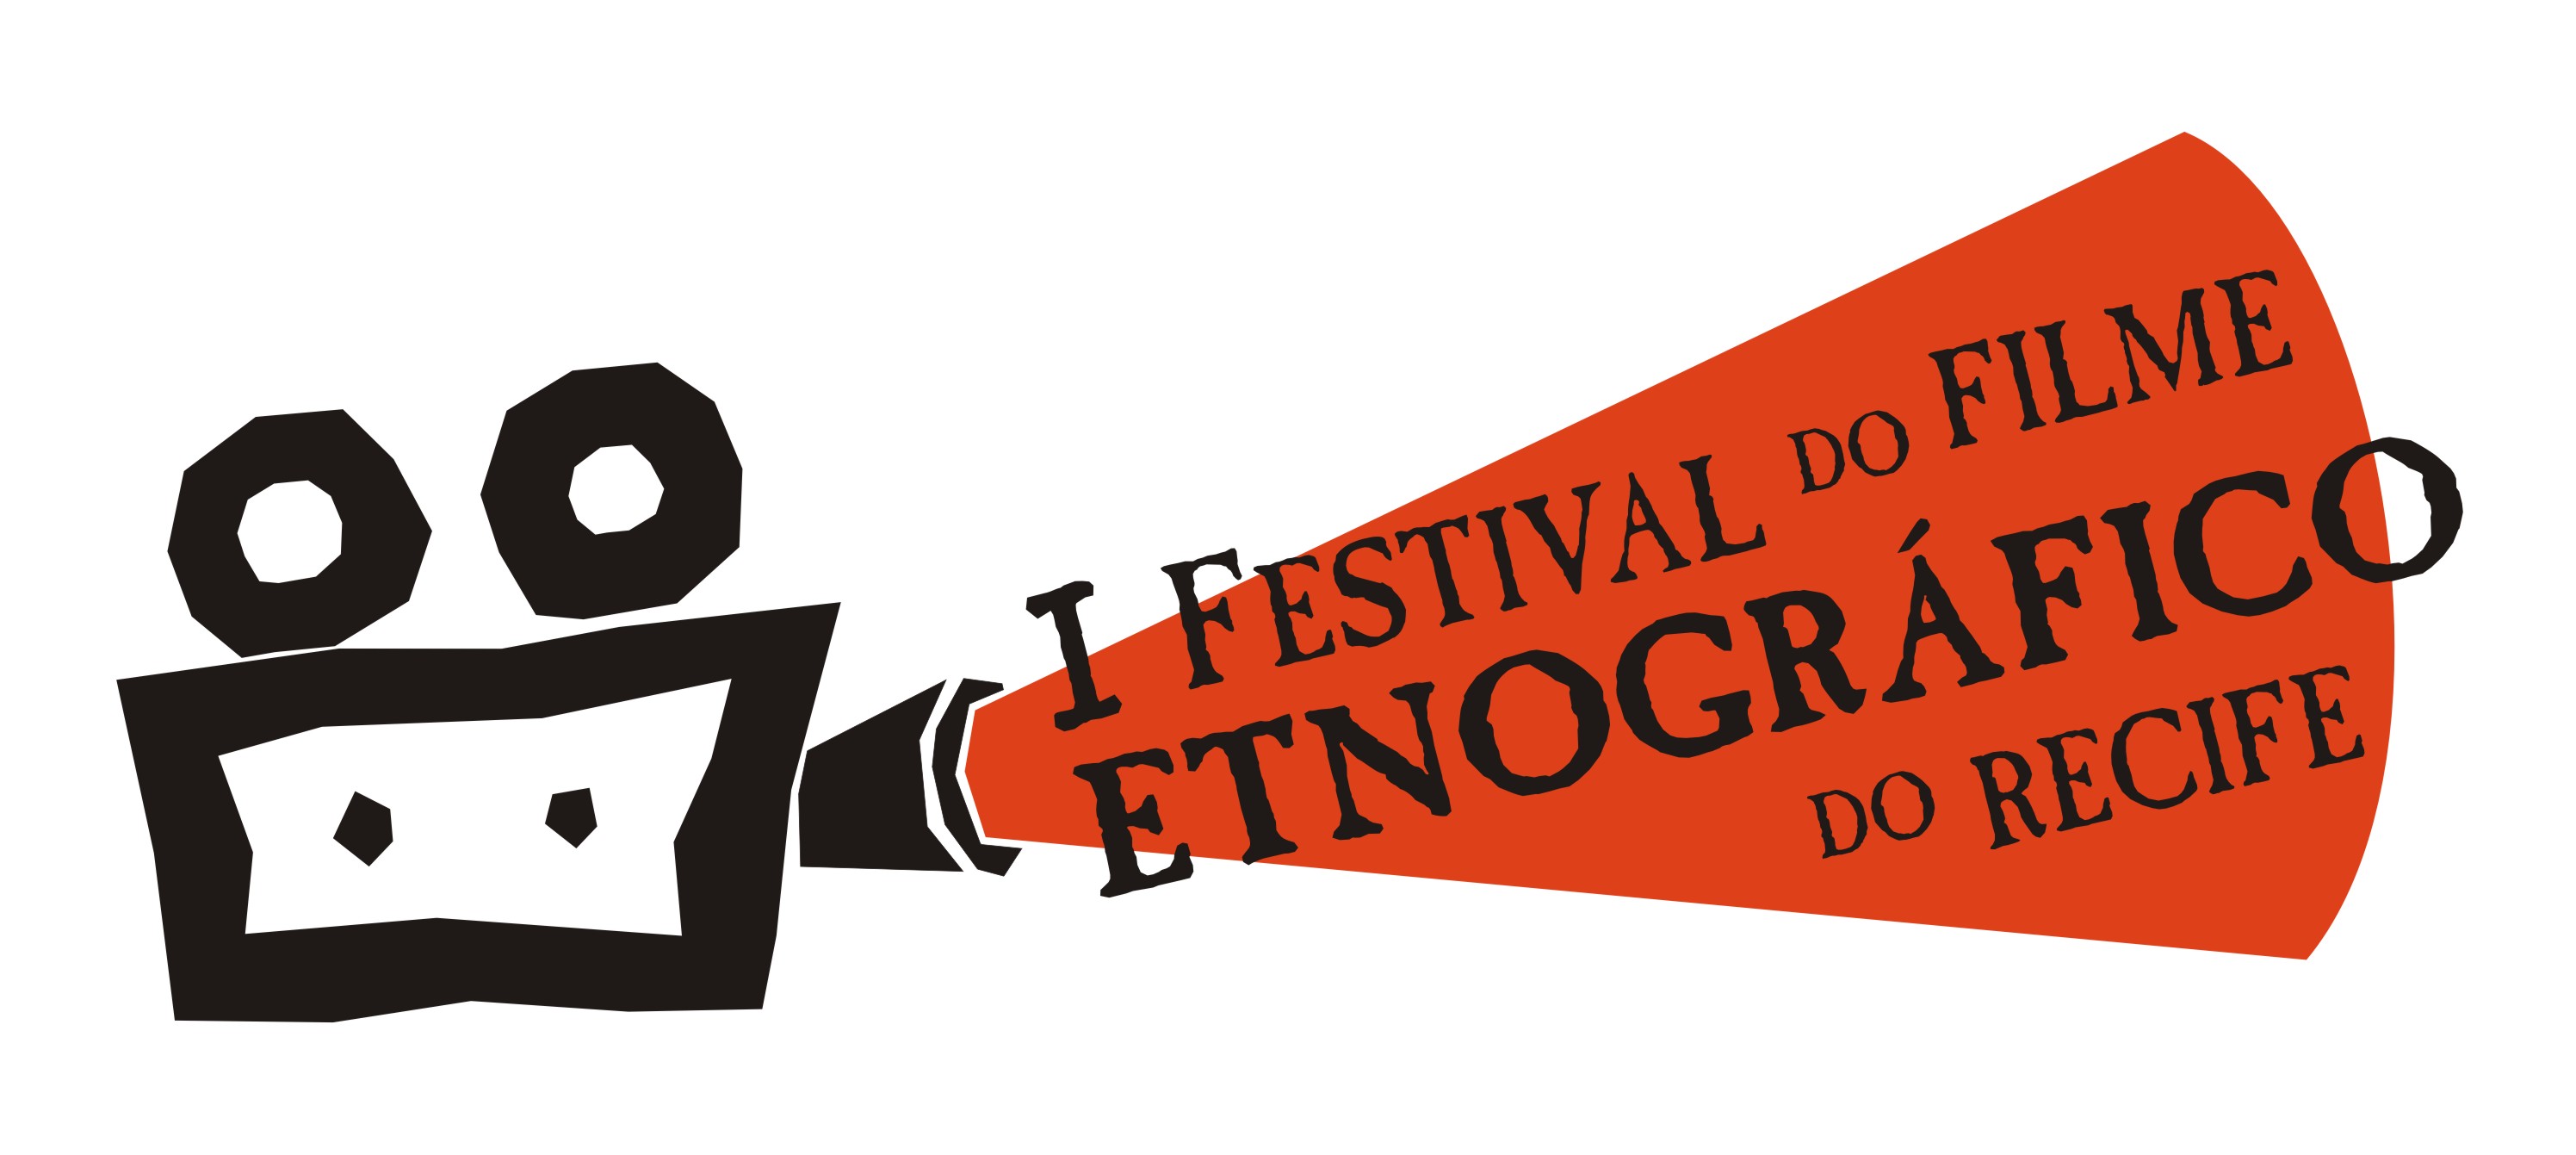 II Festival do Filme Etnográfico